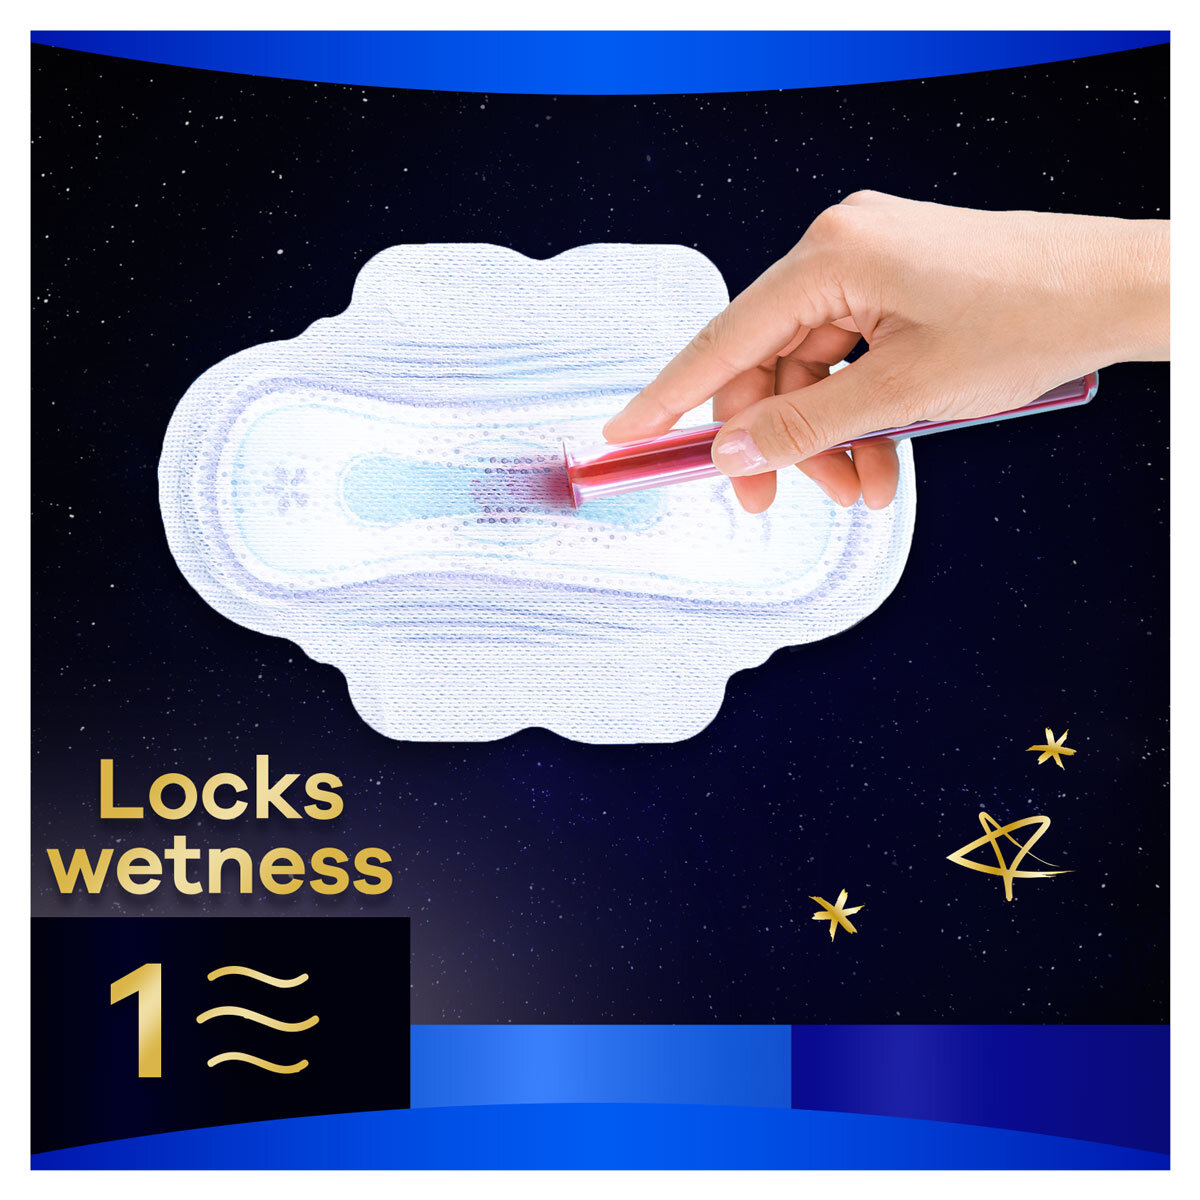 Locks Wetness